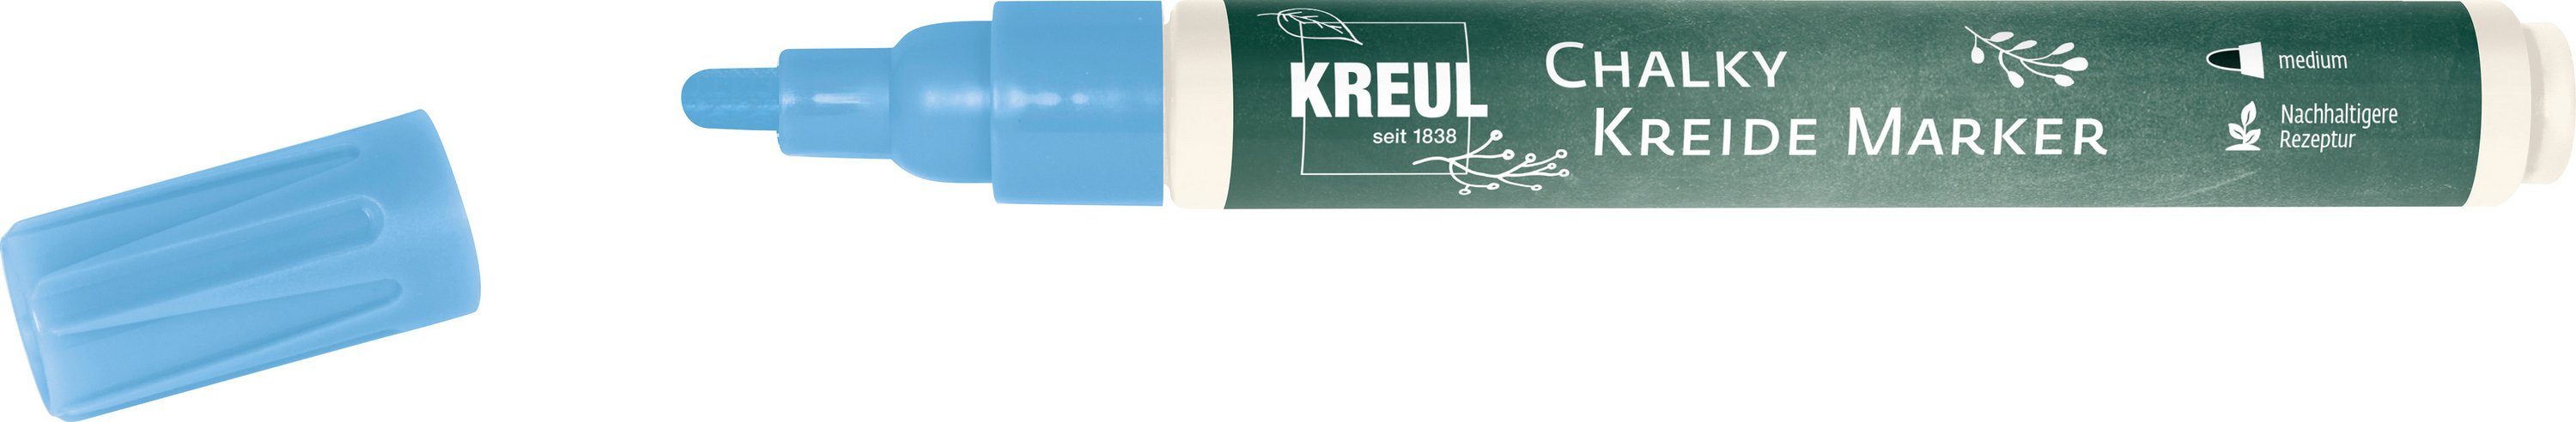 Kreul Kreidemarker Chalky, 2-3mm Strichstärke Nordic Blue